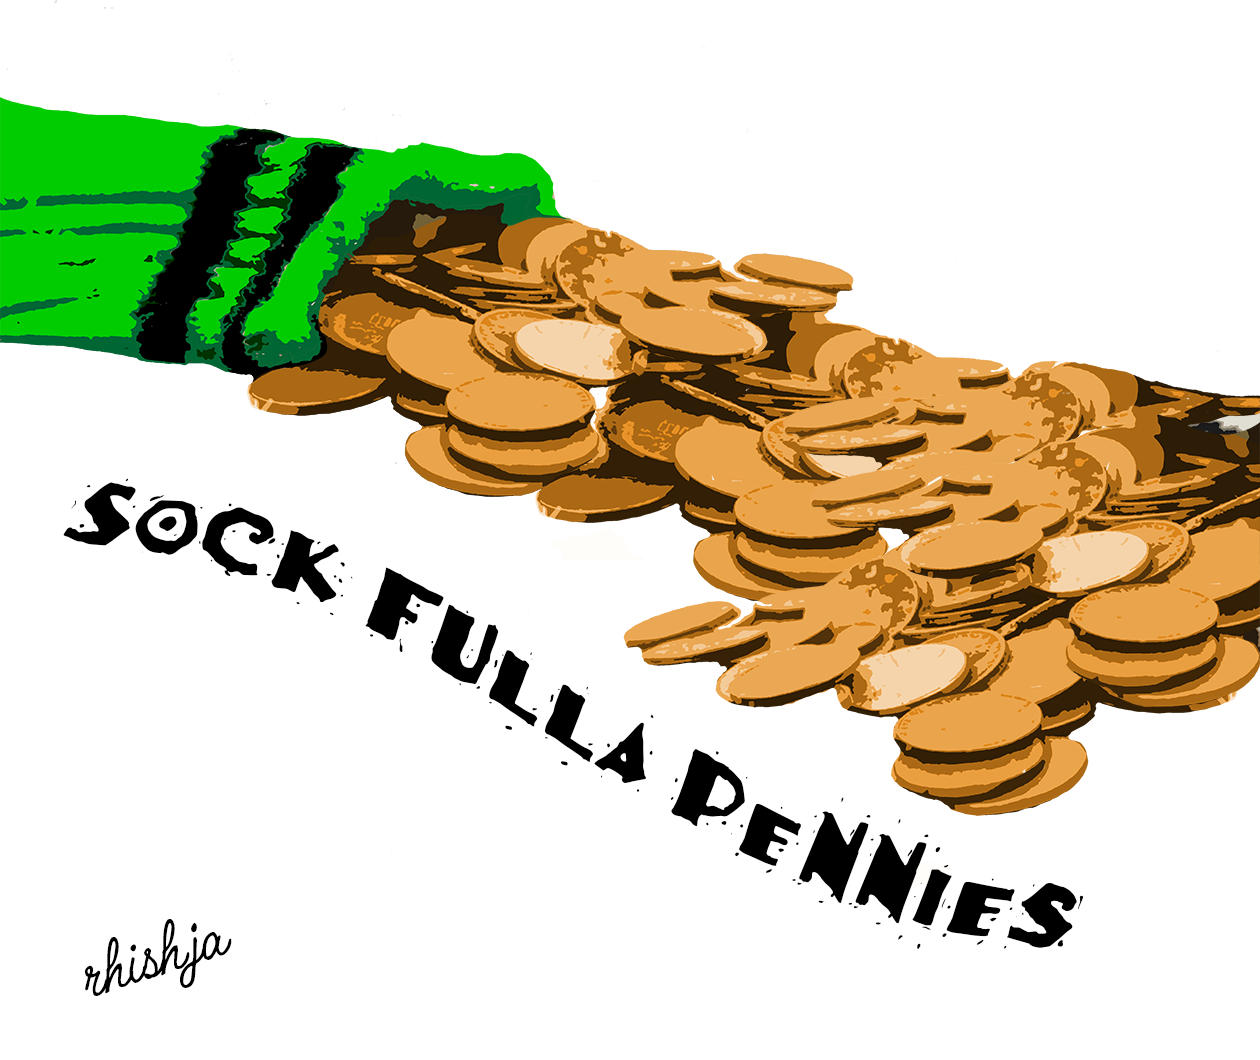 Sock Fulla Pennies artwork by Rhishja Cota.